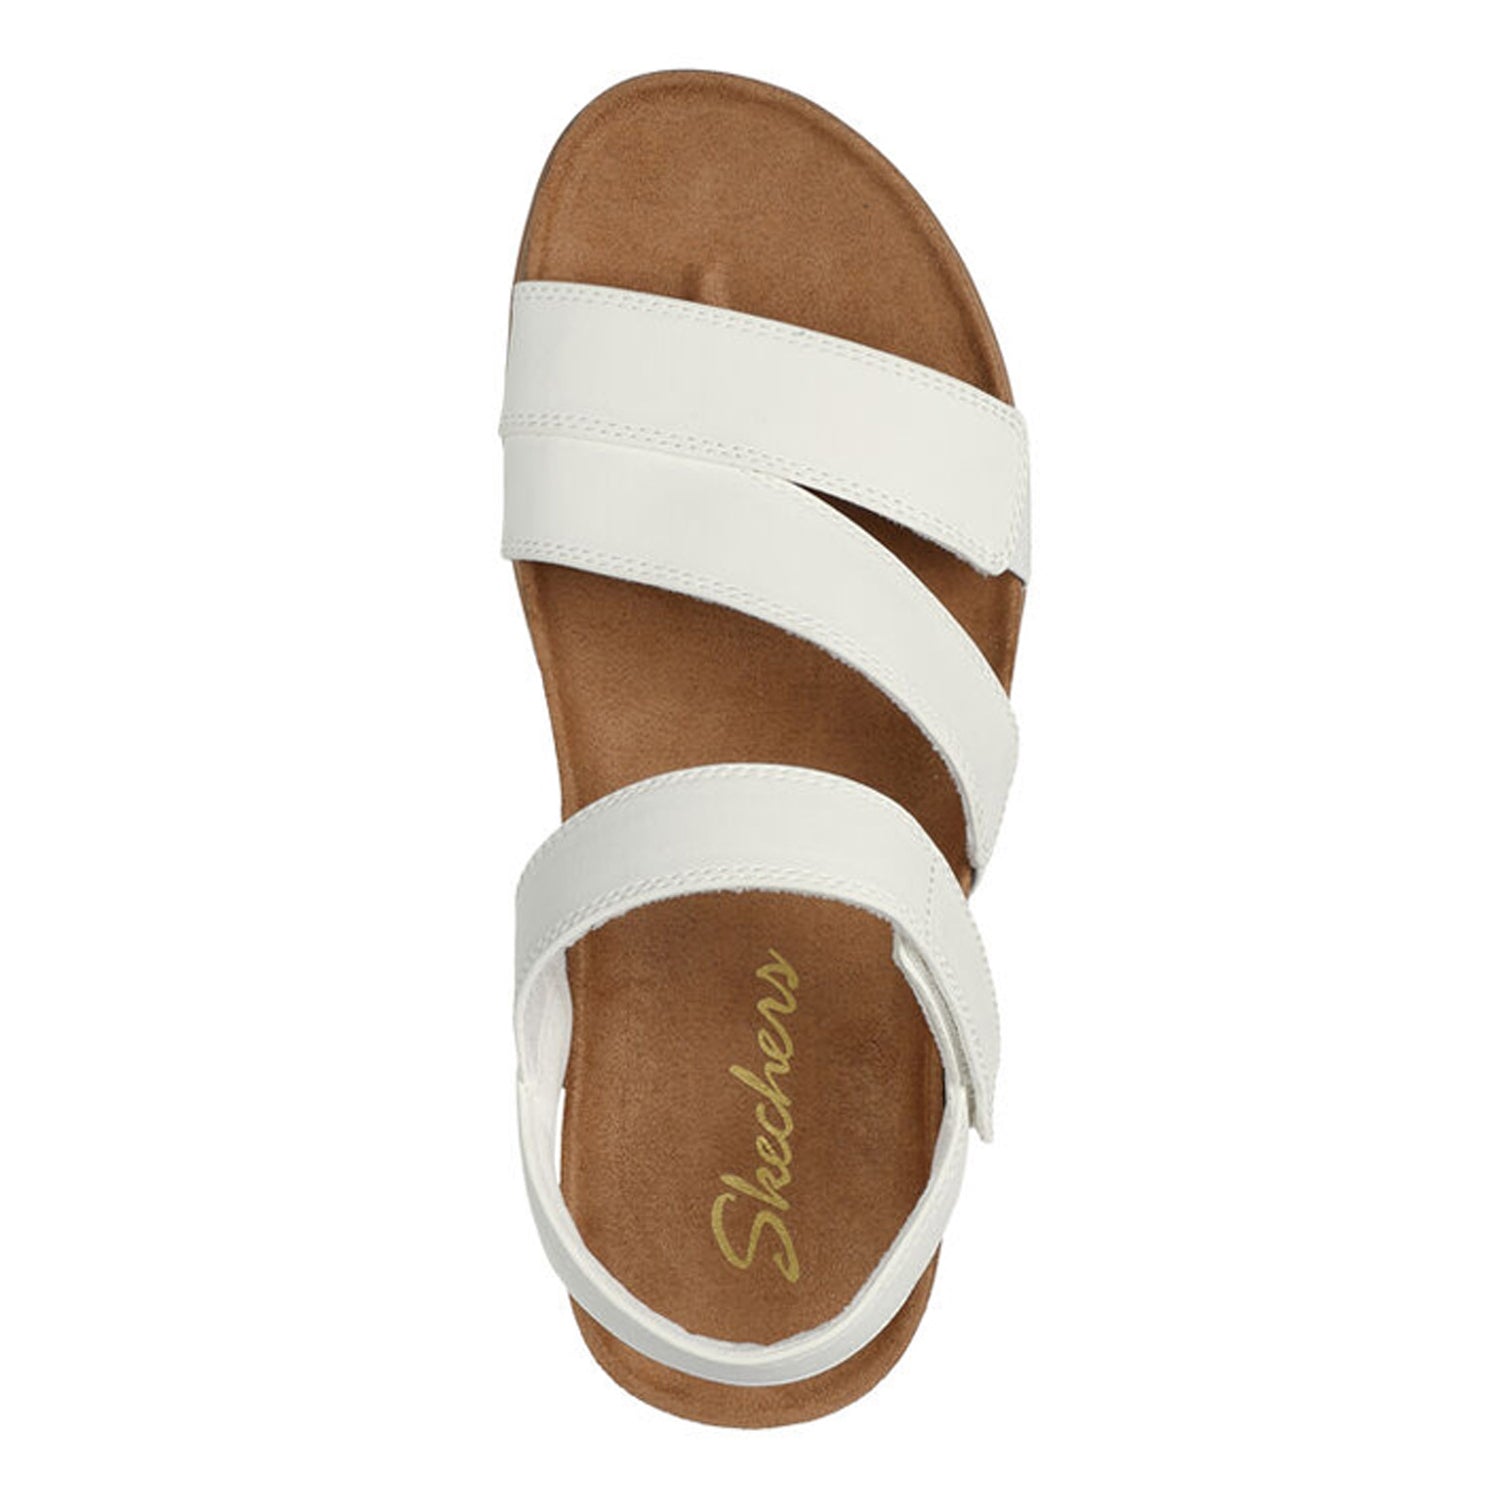 Peltz Shoes  Women's Skechers Lifted Comfort Sandal white 163252-WHT